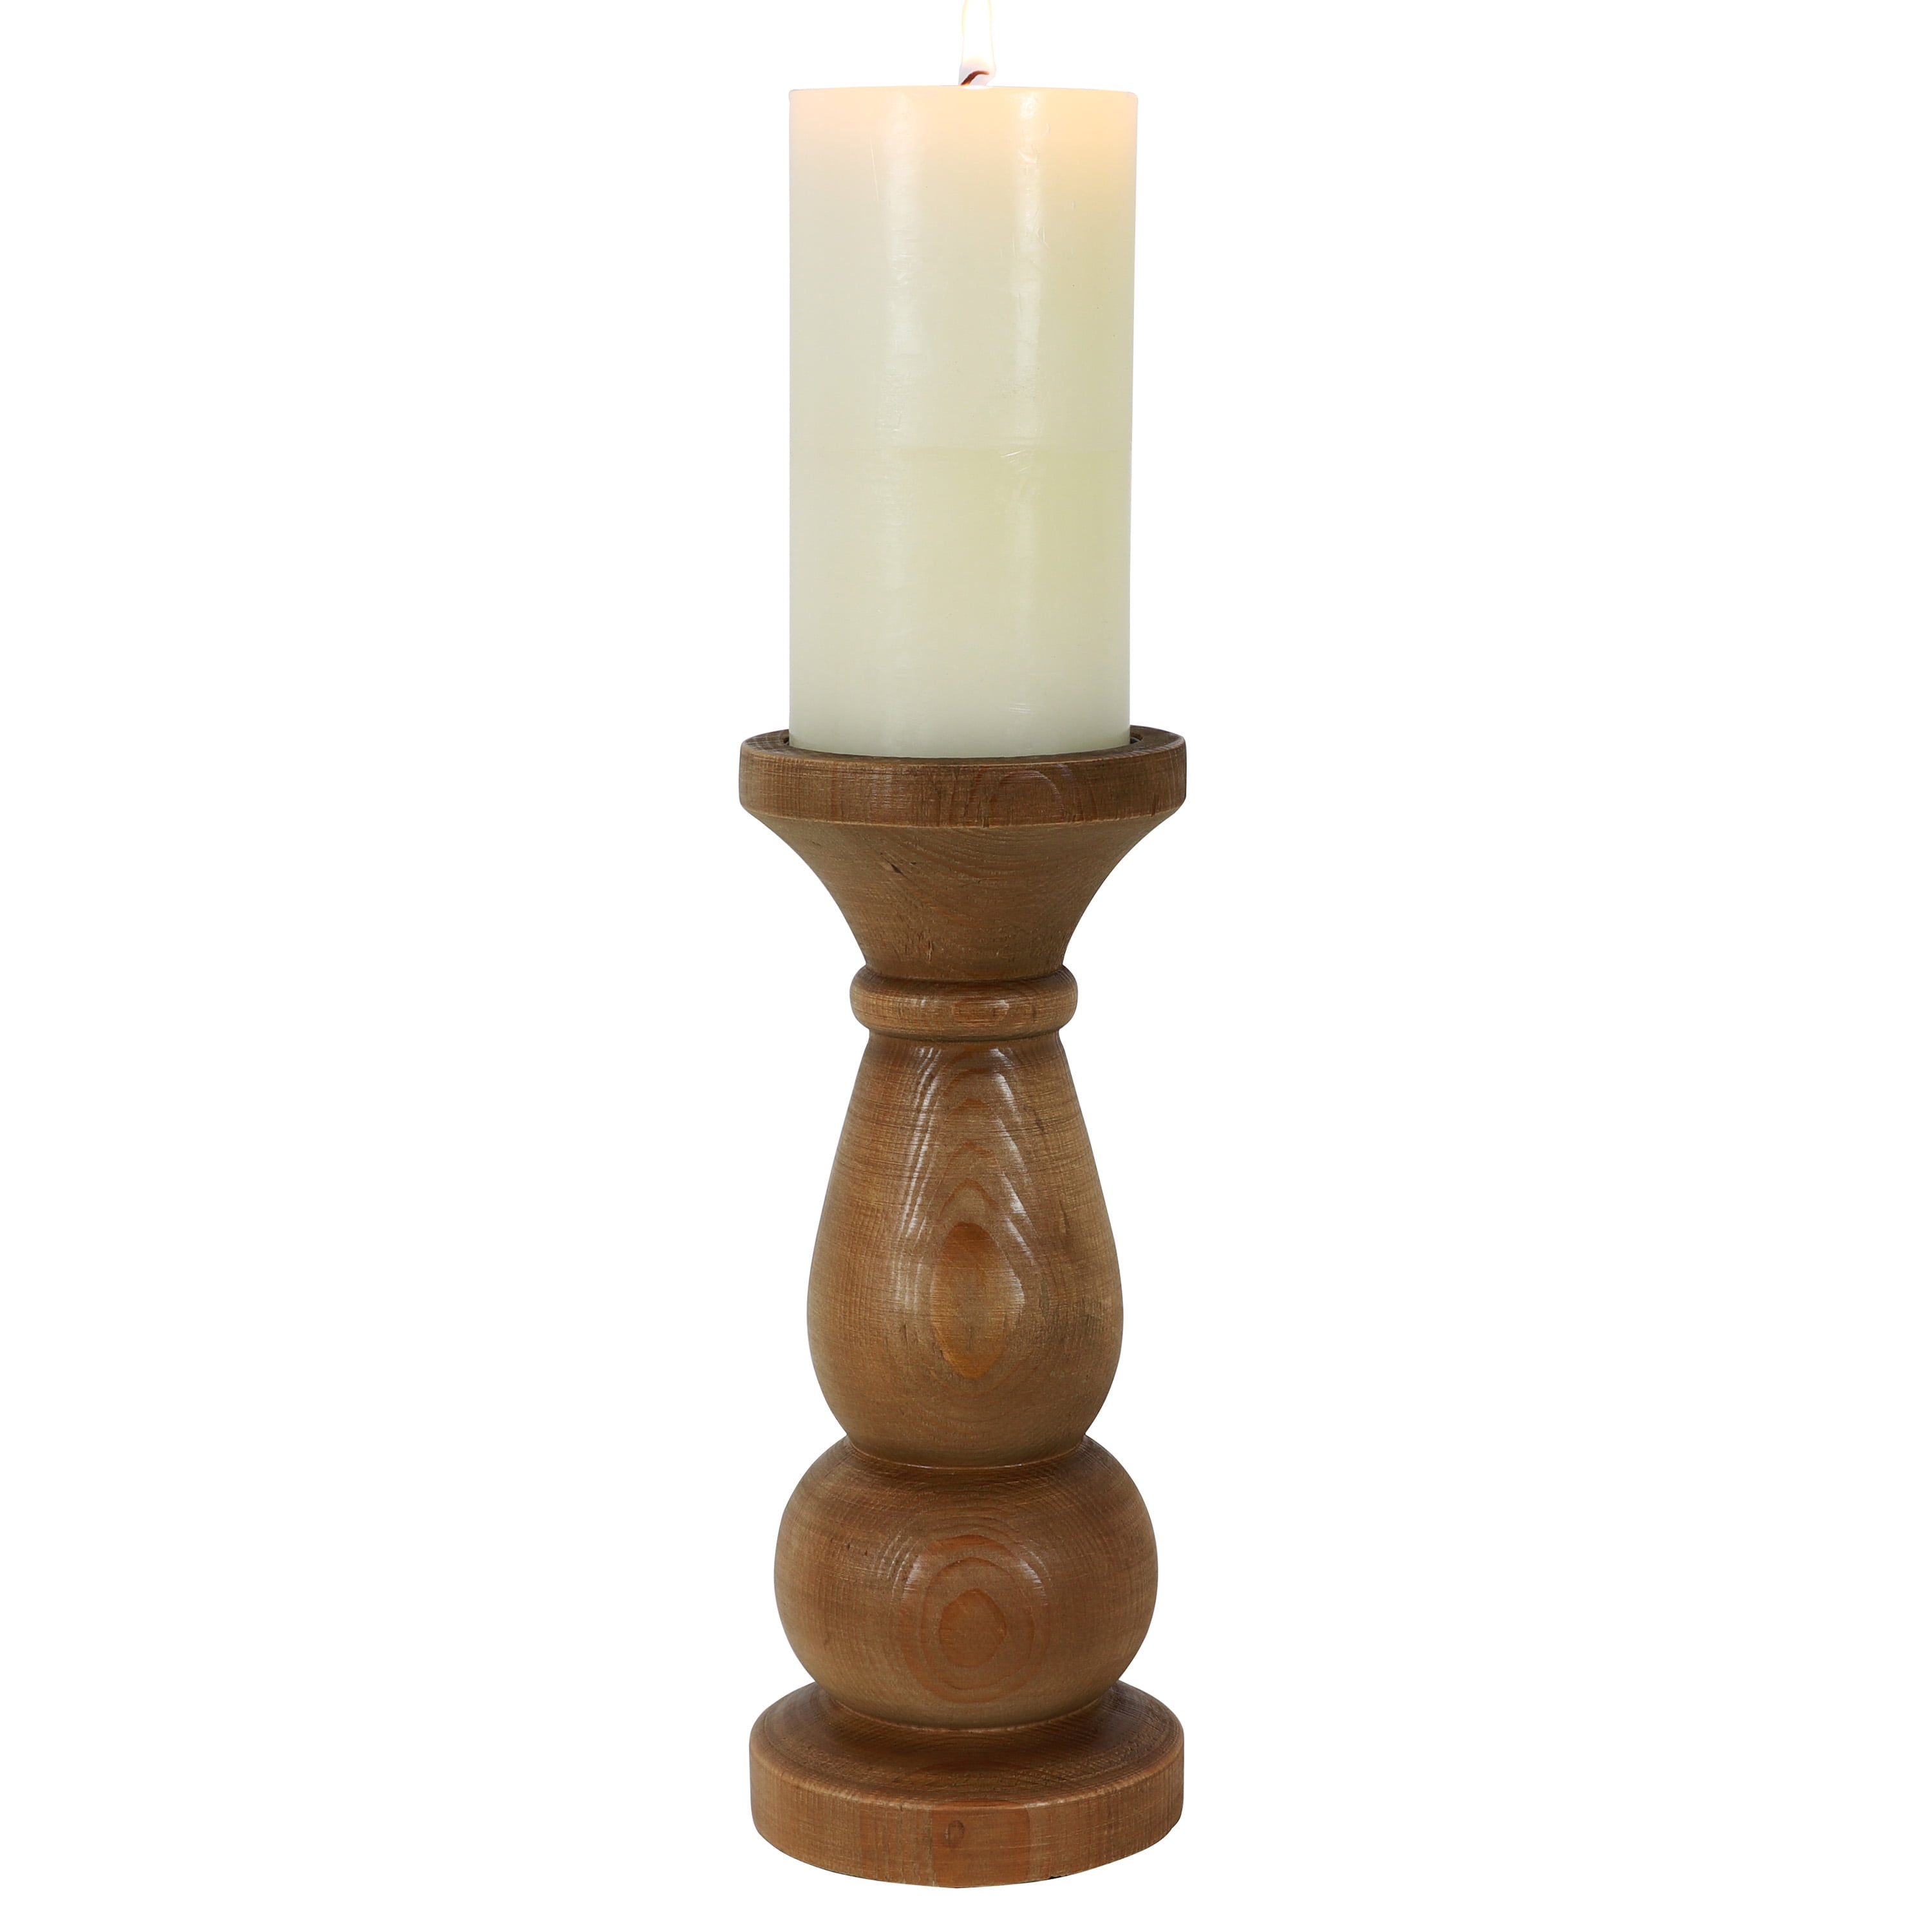 Wooden Pillar Candle Holder from Retreat Home, oak effect